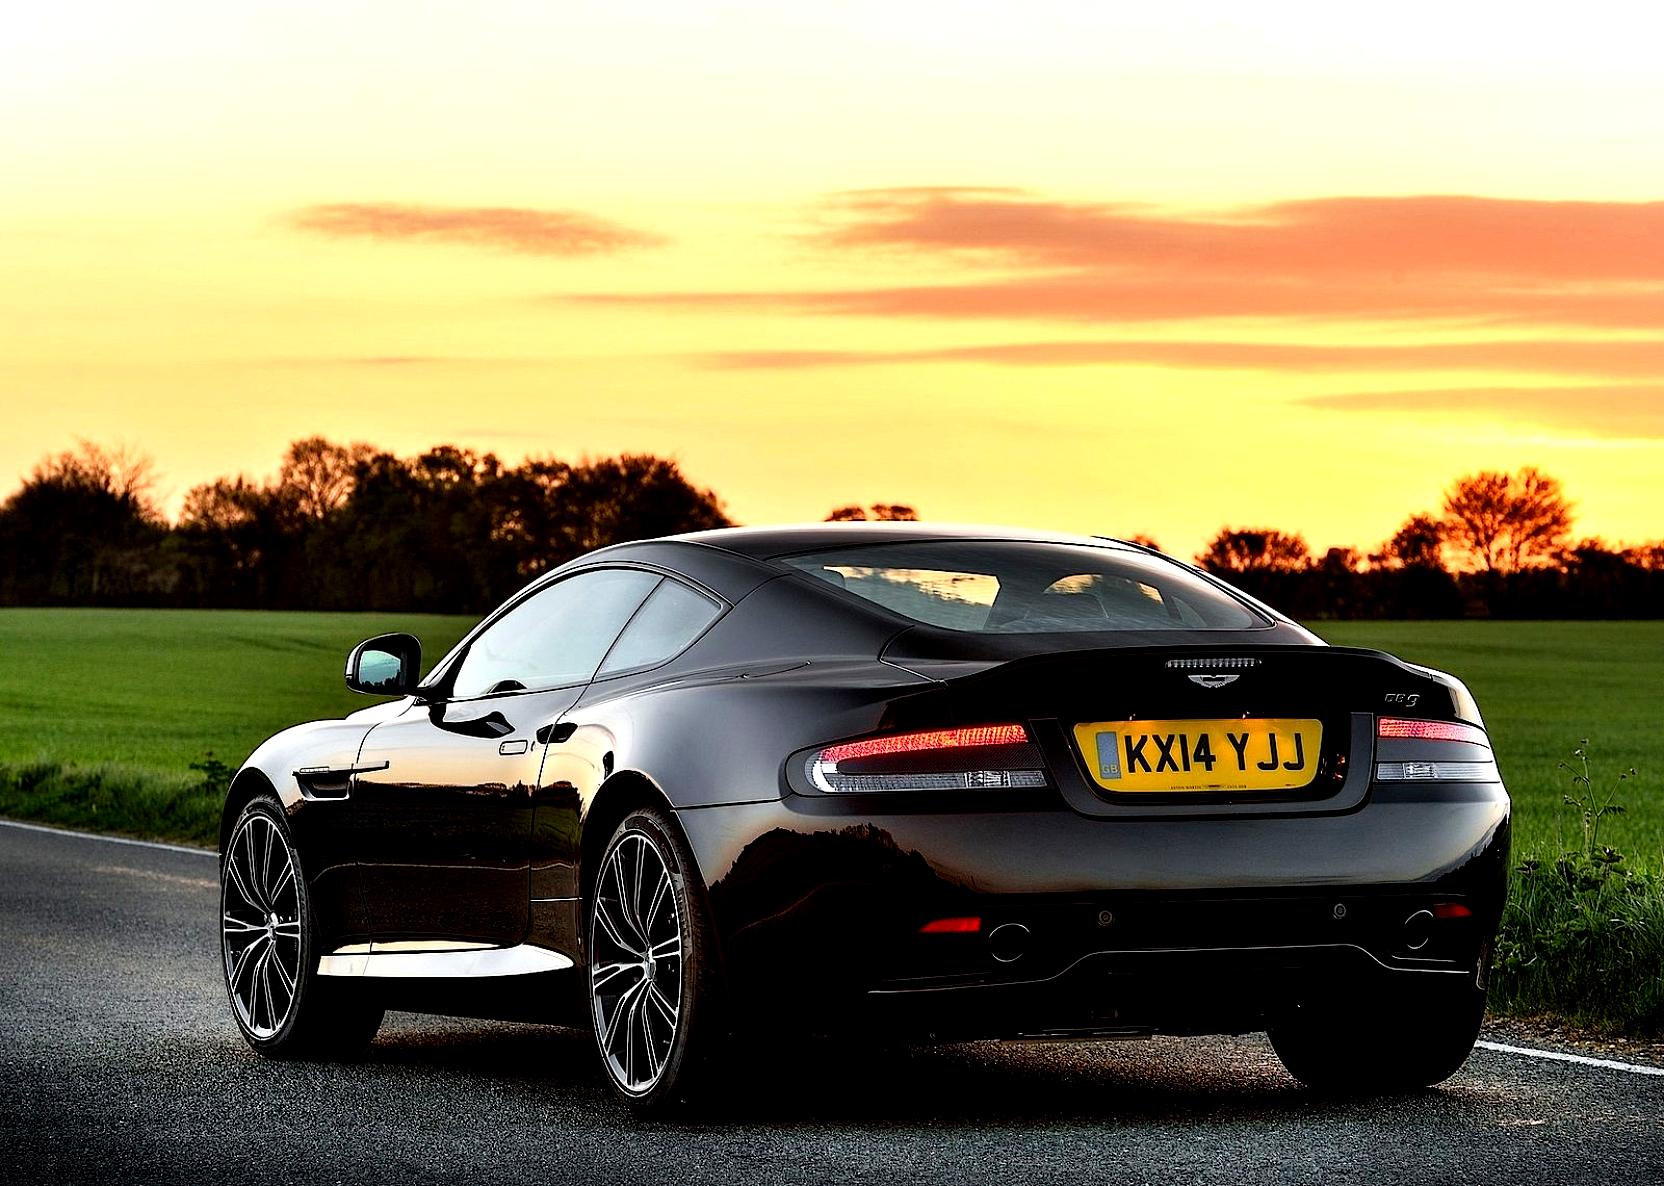 Aston Martin DB9 Carbon Edition 2014 #92